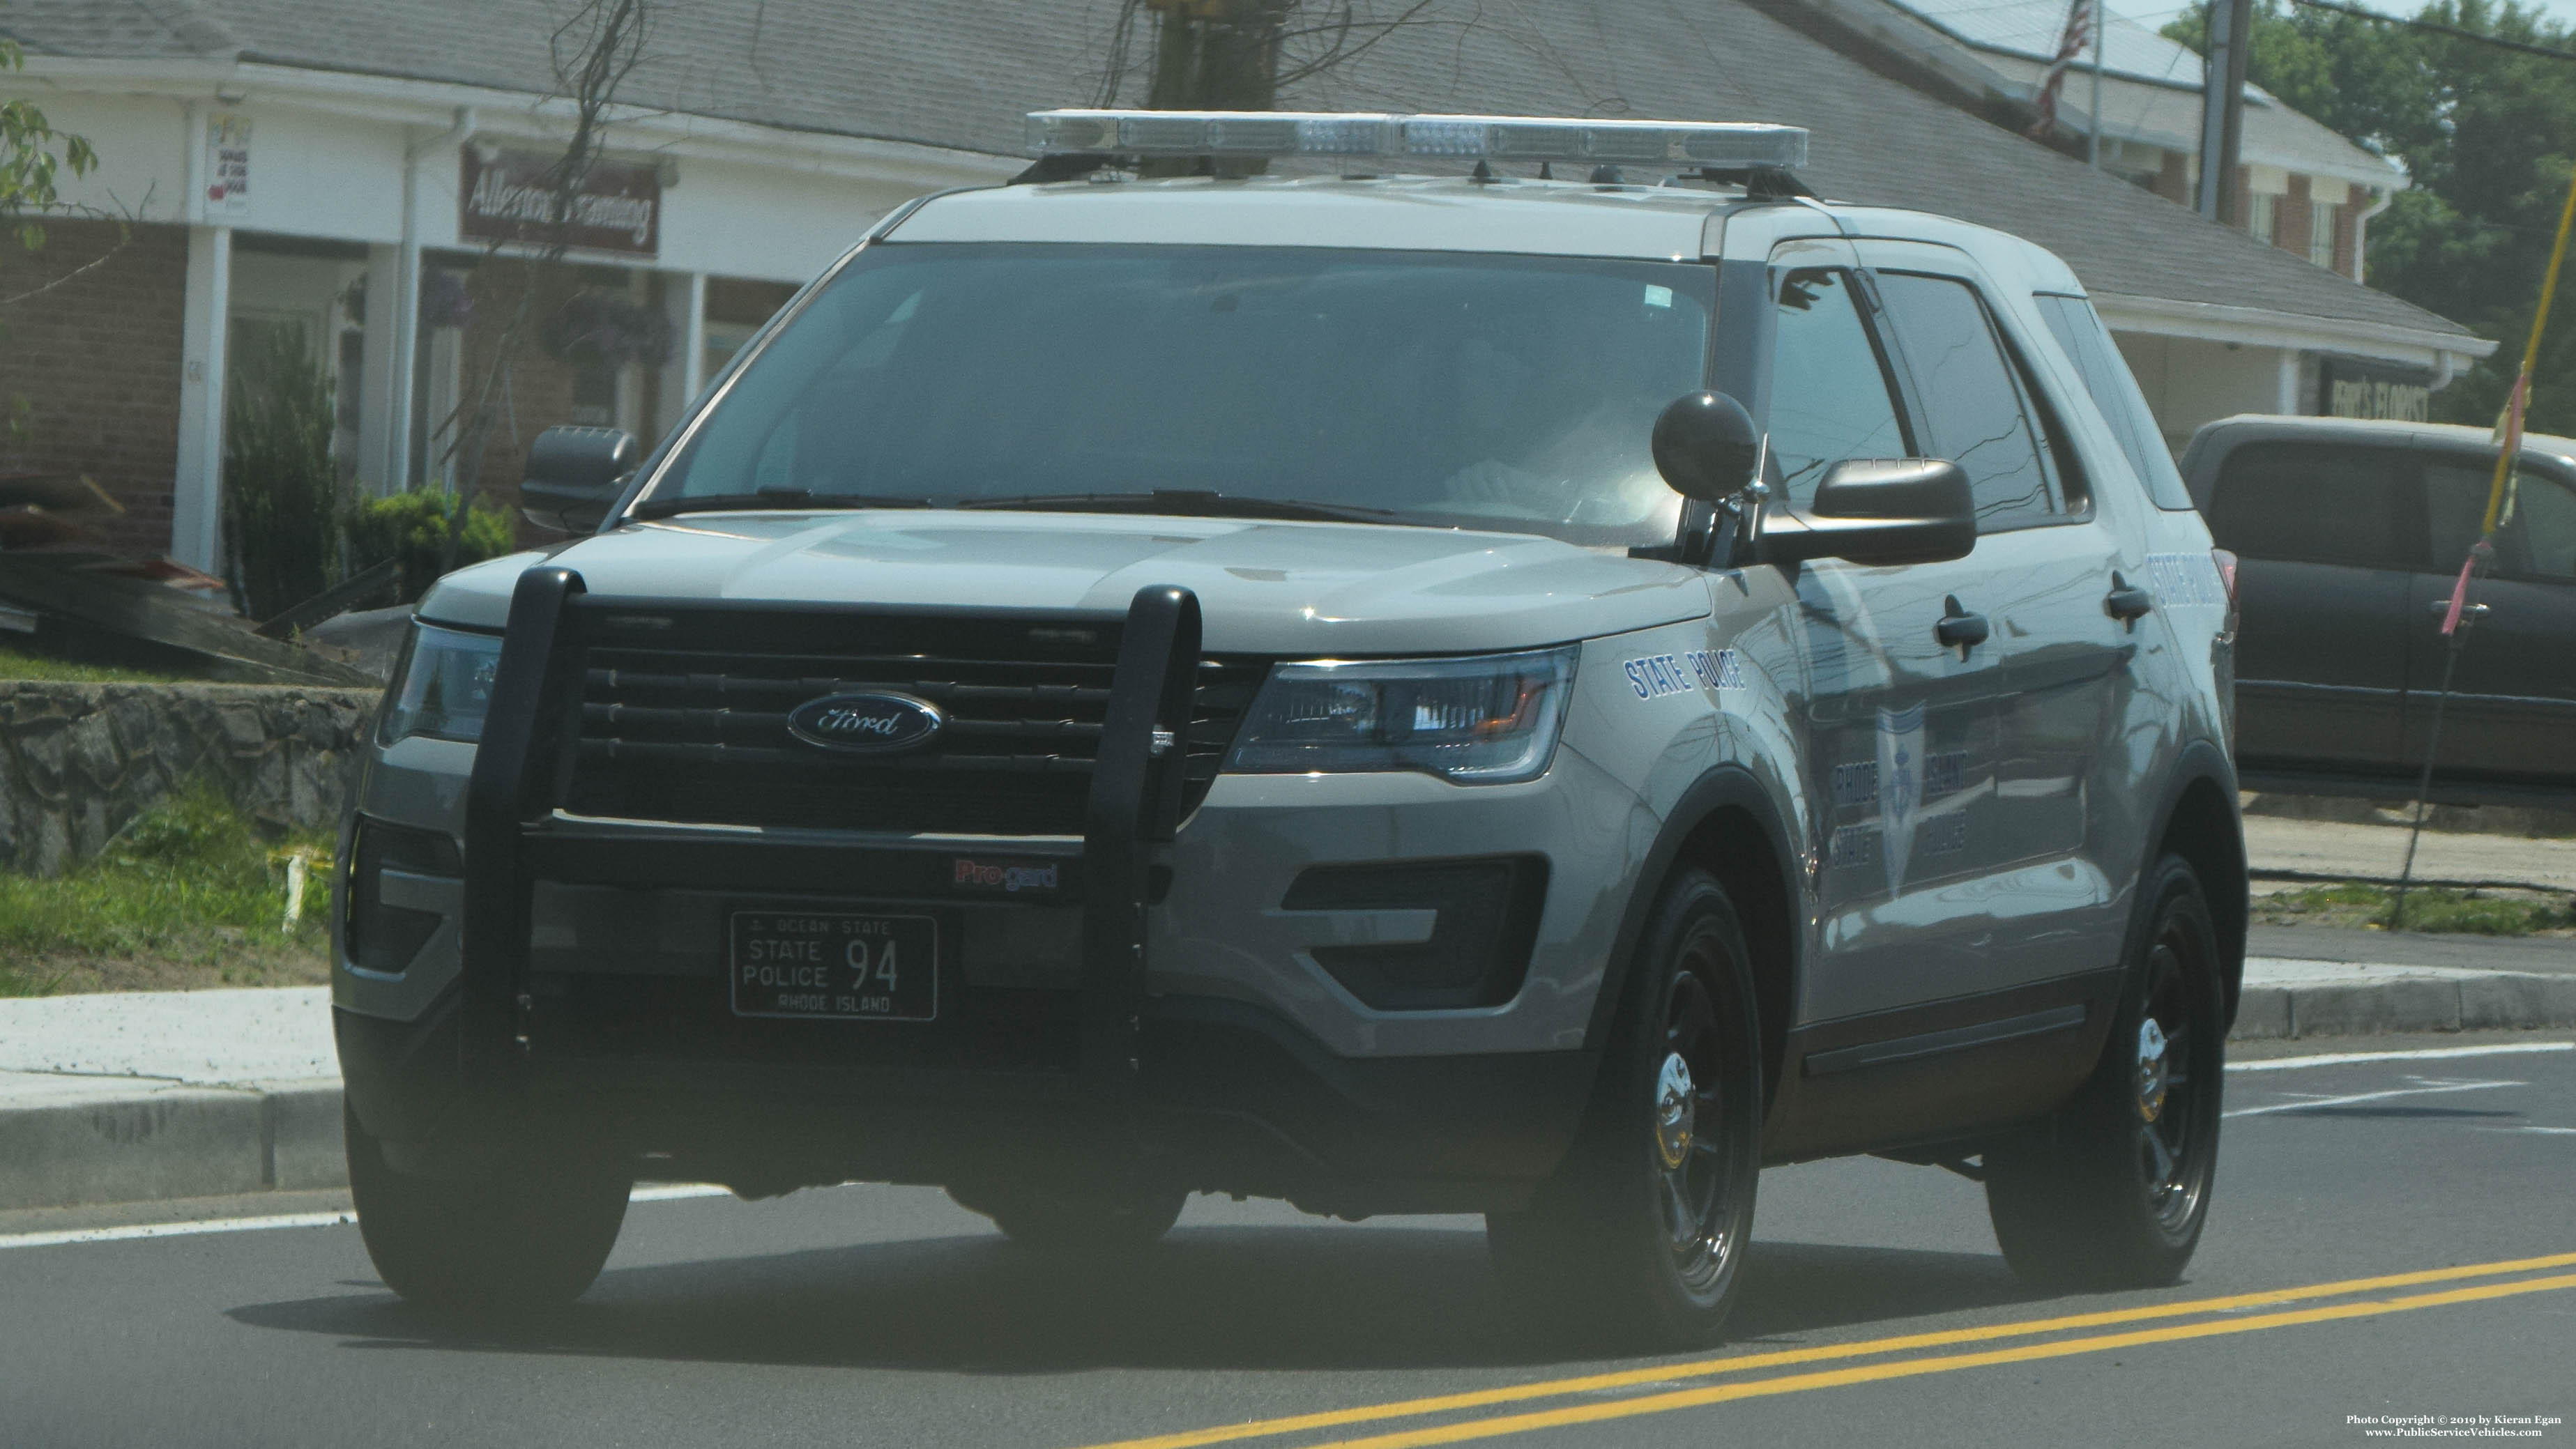 A photo  of Rhode Island State Police
            Cruiser 94, a 2018 Ford Police Interceptor Utility             taken by Kieran Egan